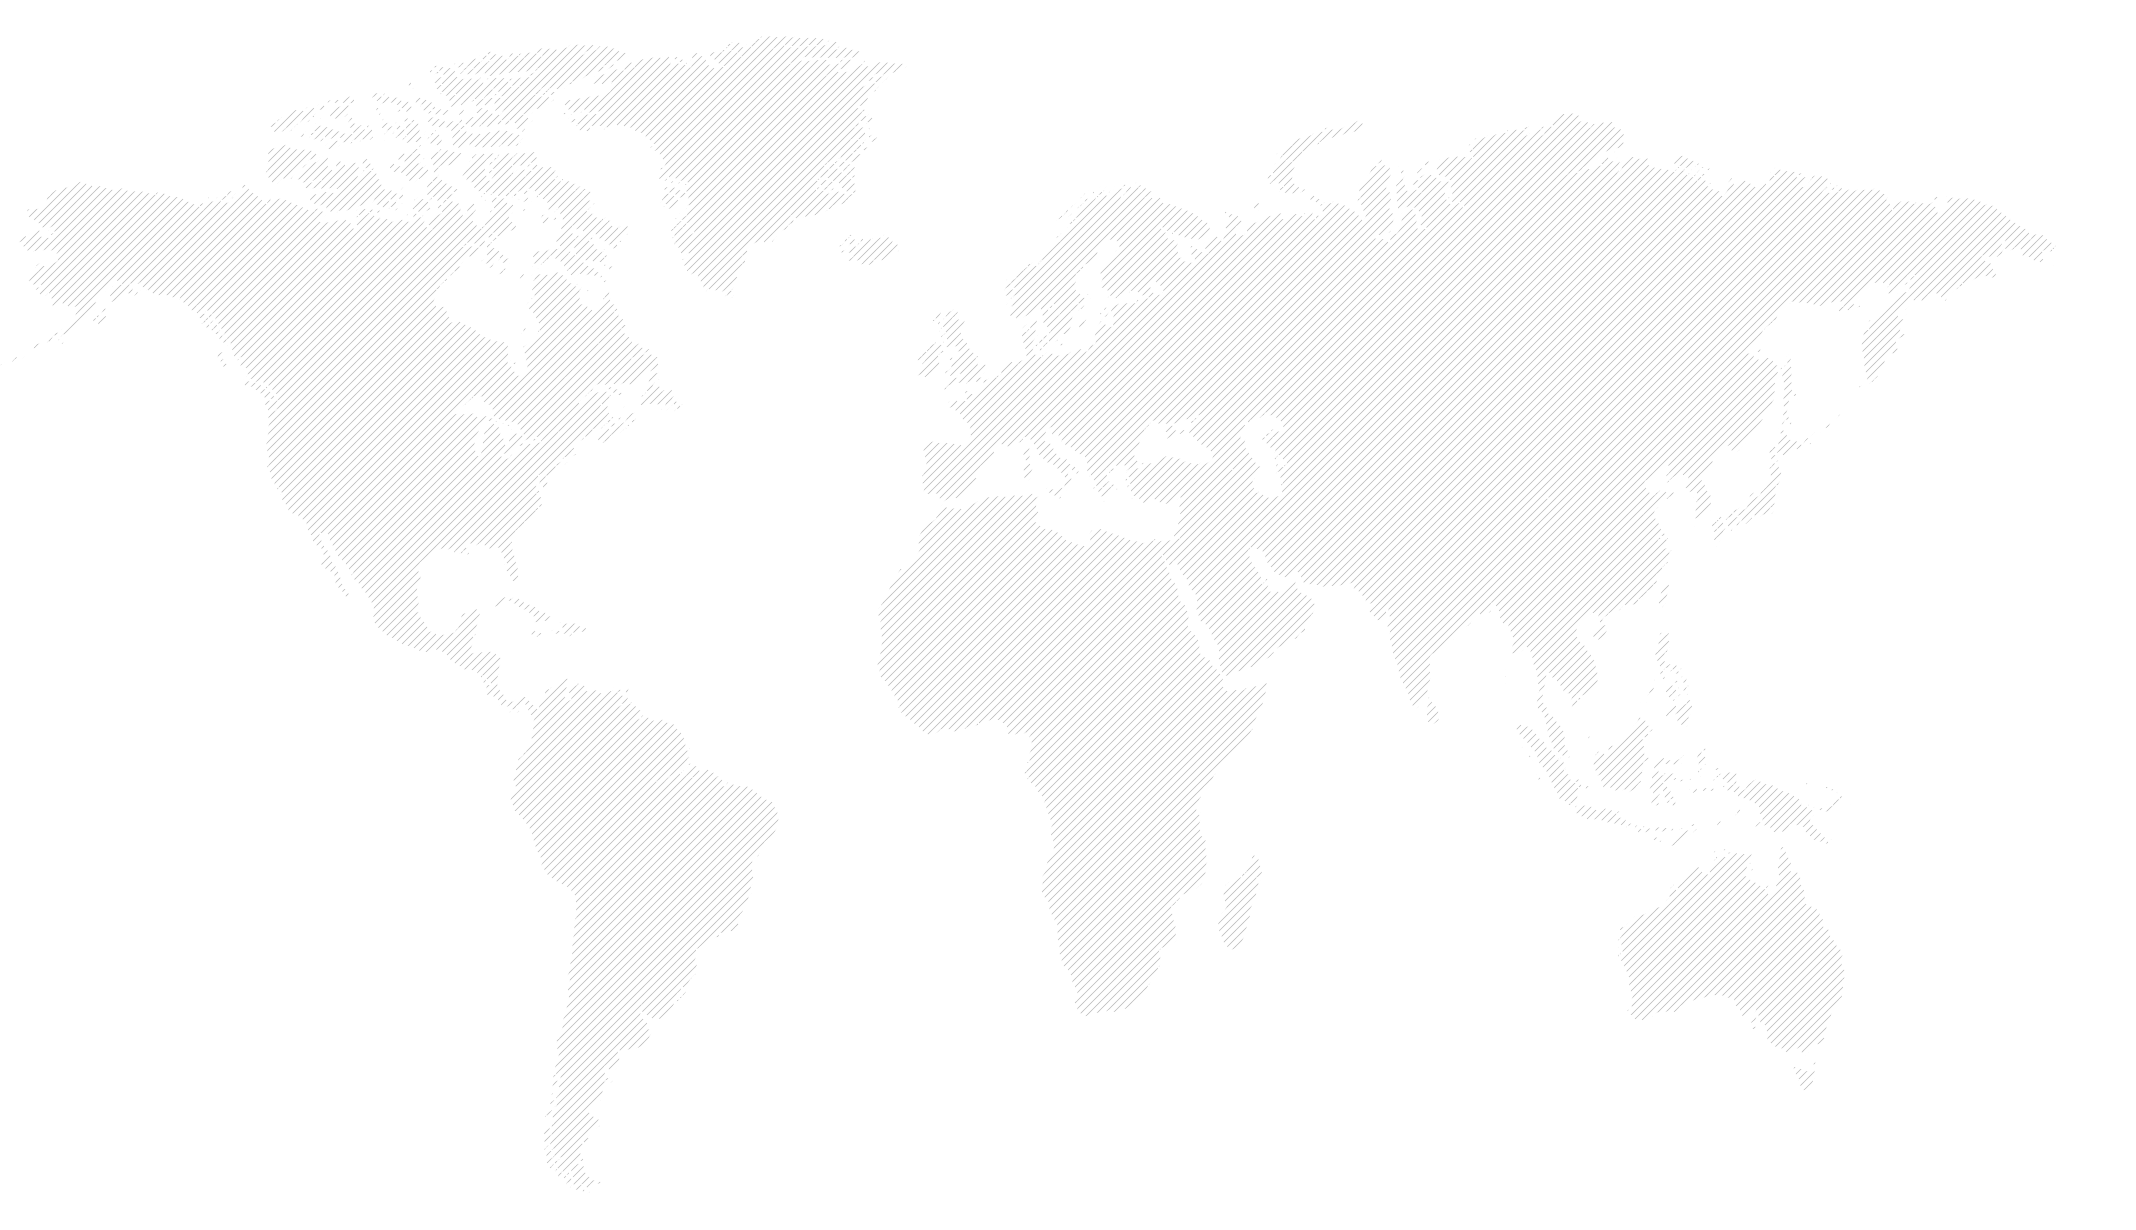 Our partner universities around the world